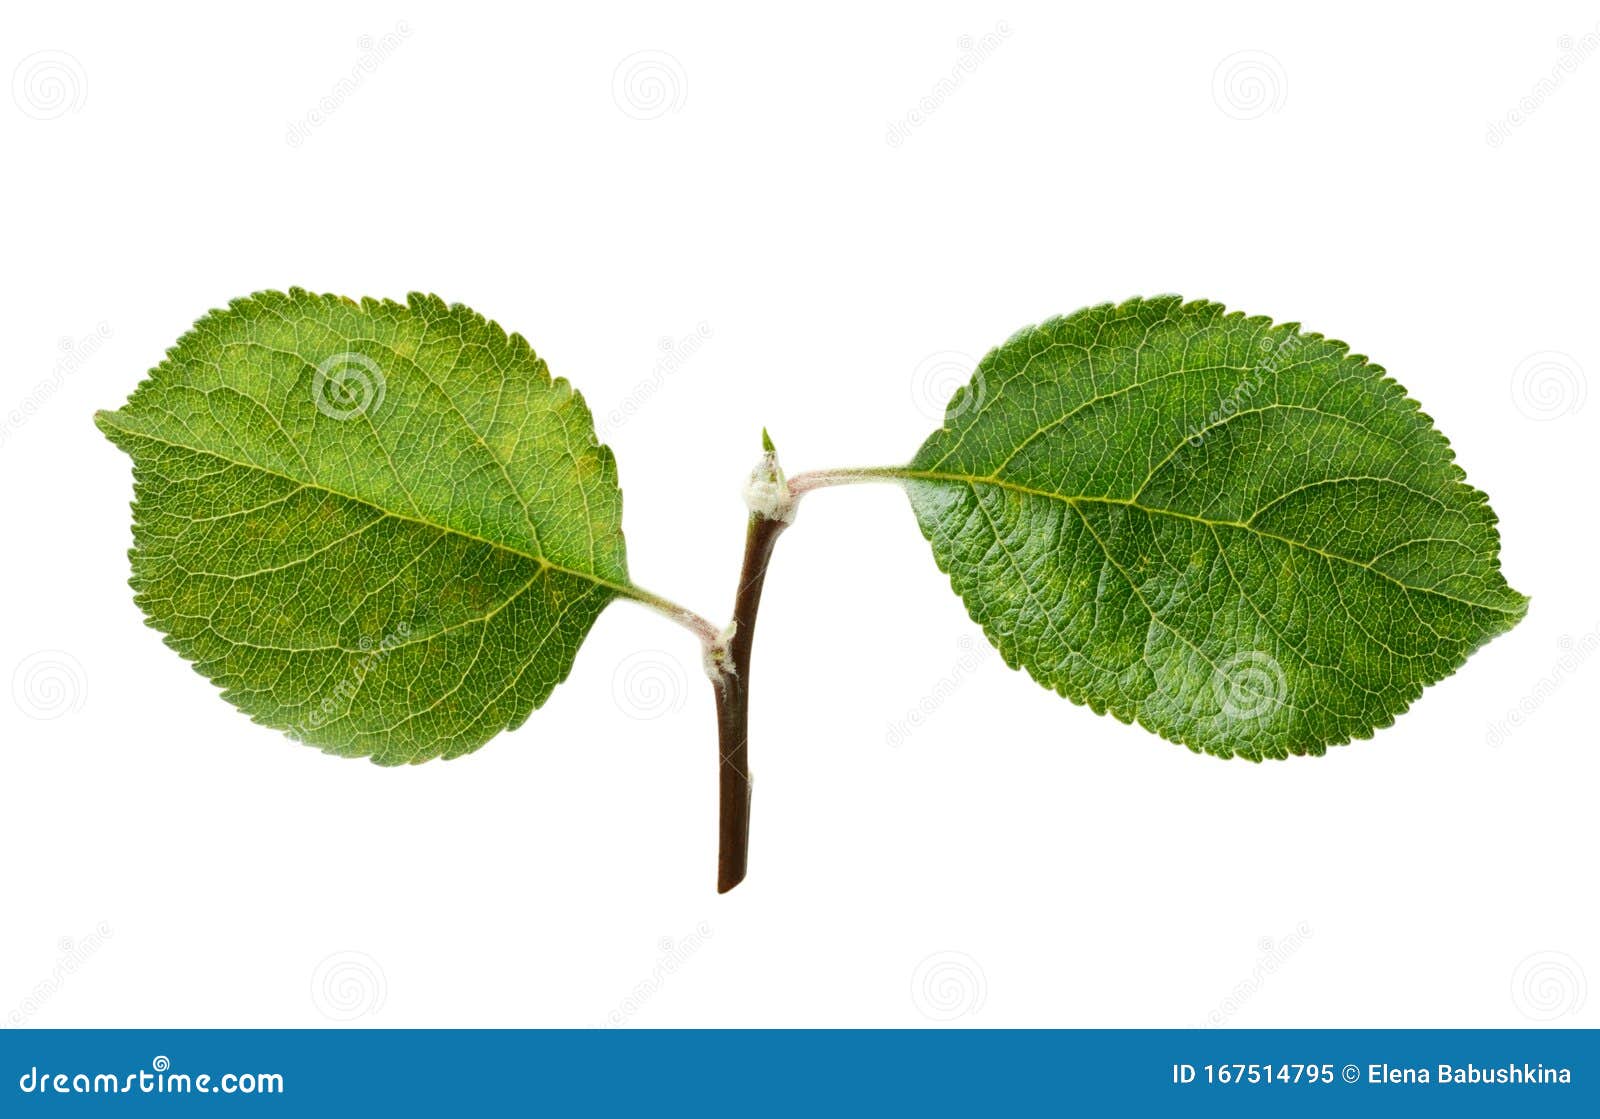 Steam and leaf фото 19